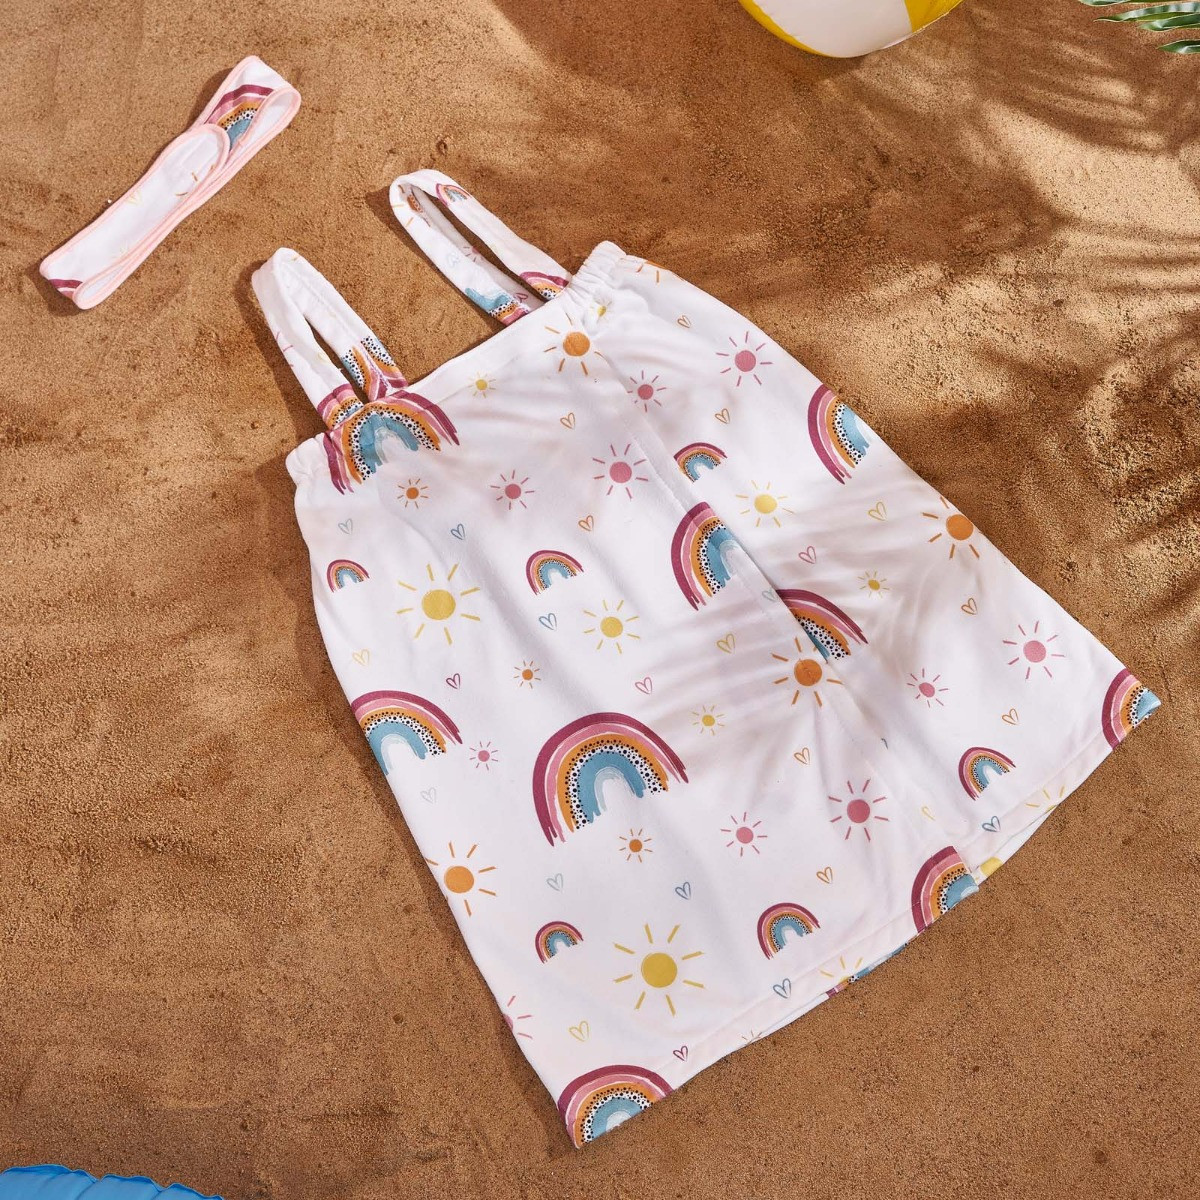 Dreamscene Kids Rainbow Print Towel Dress, White - One Size>